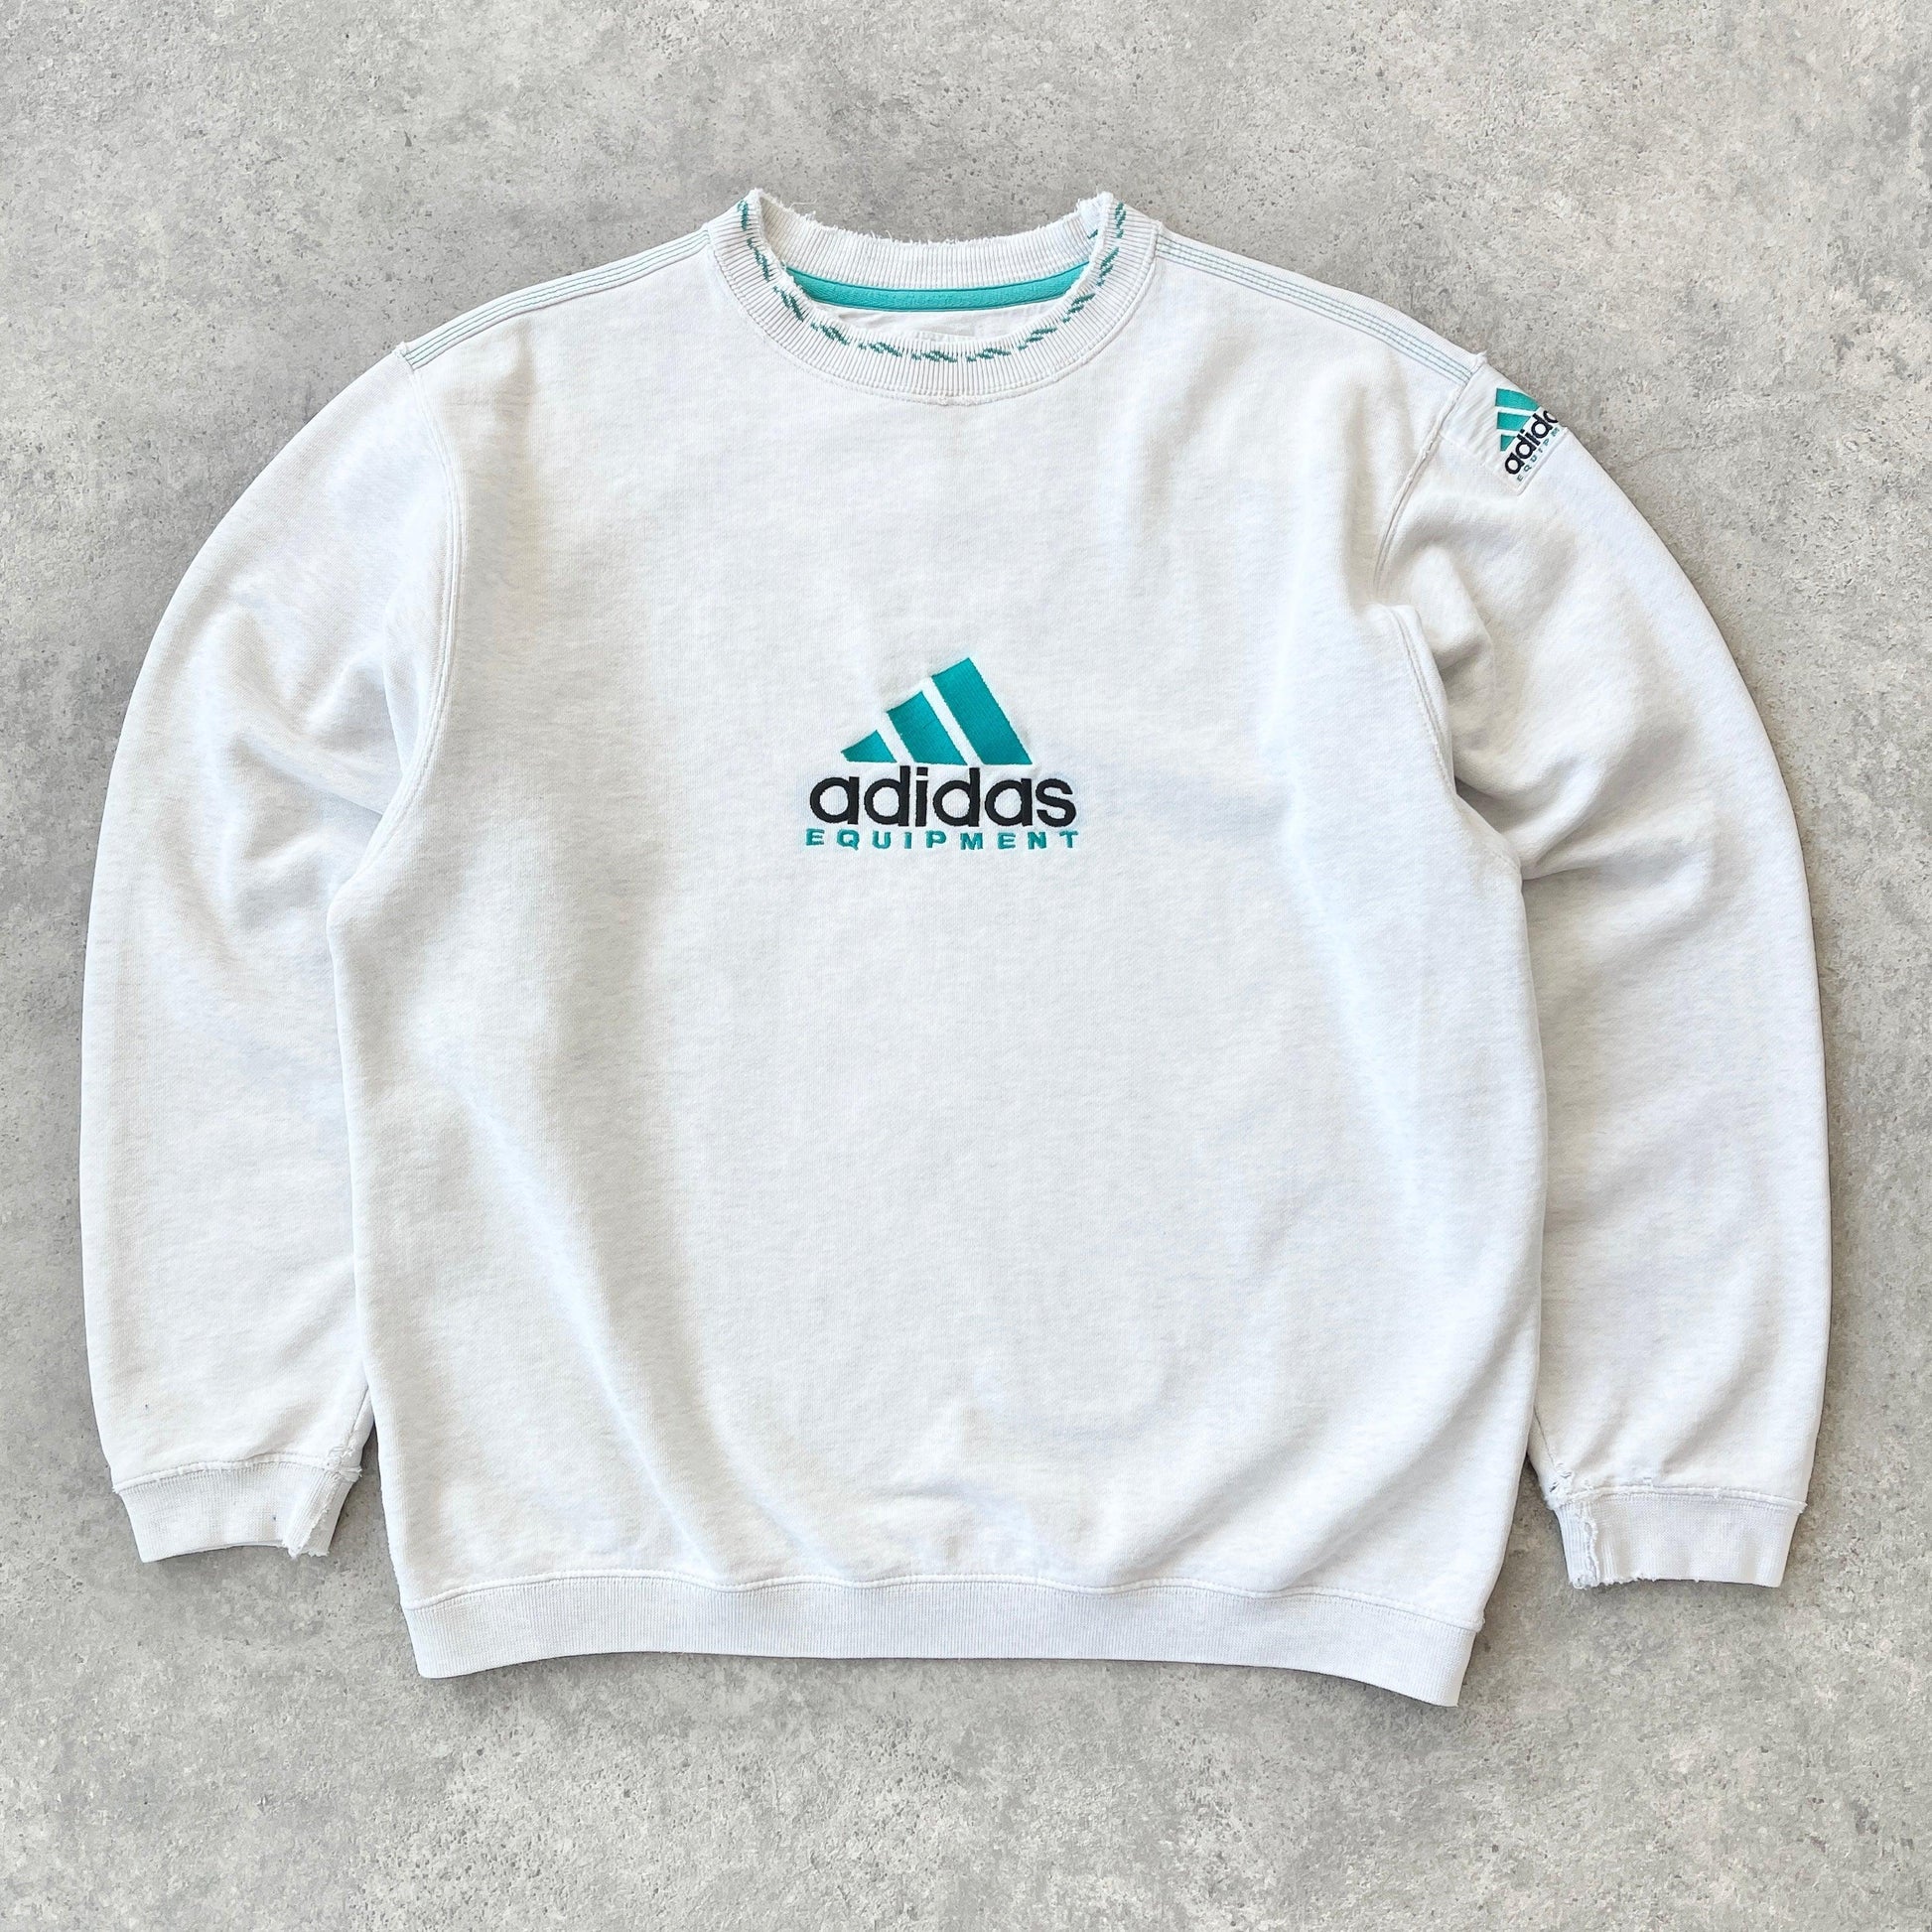 Adidas Equipment 1990s heavyweight embroidered sweatshirt (S) - Known Source